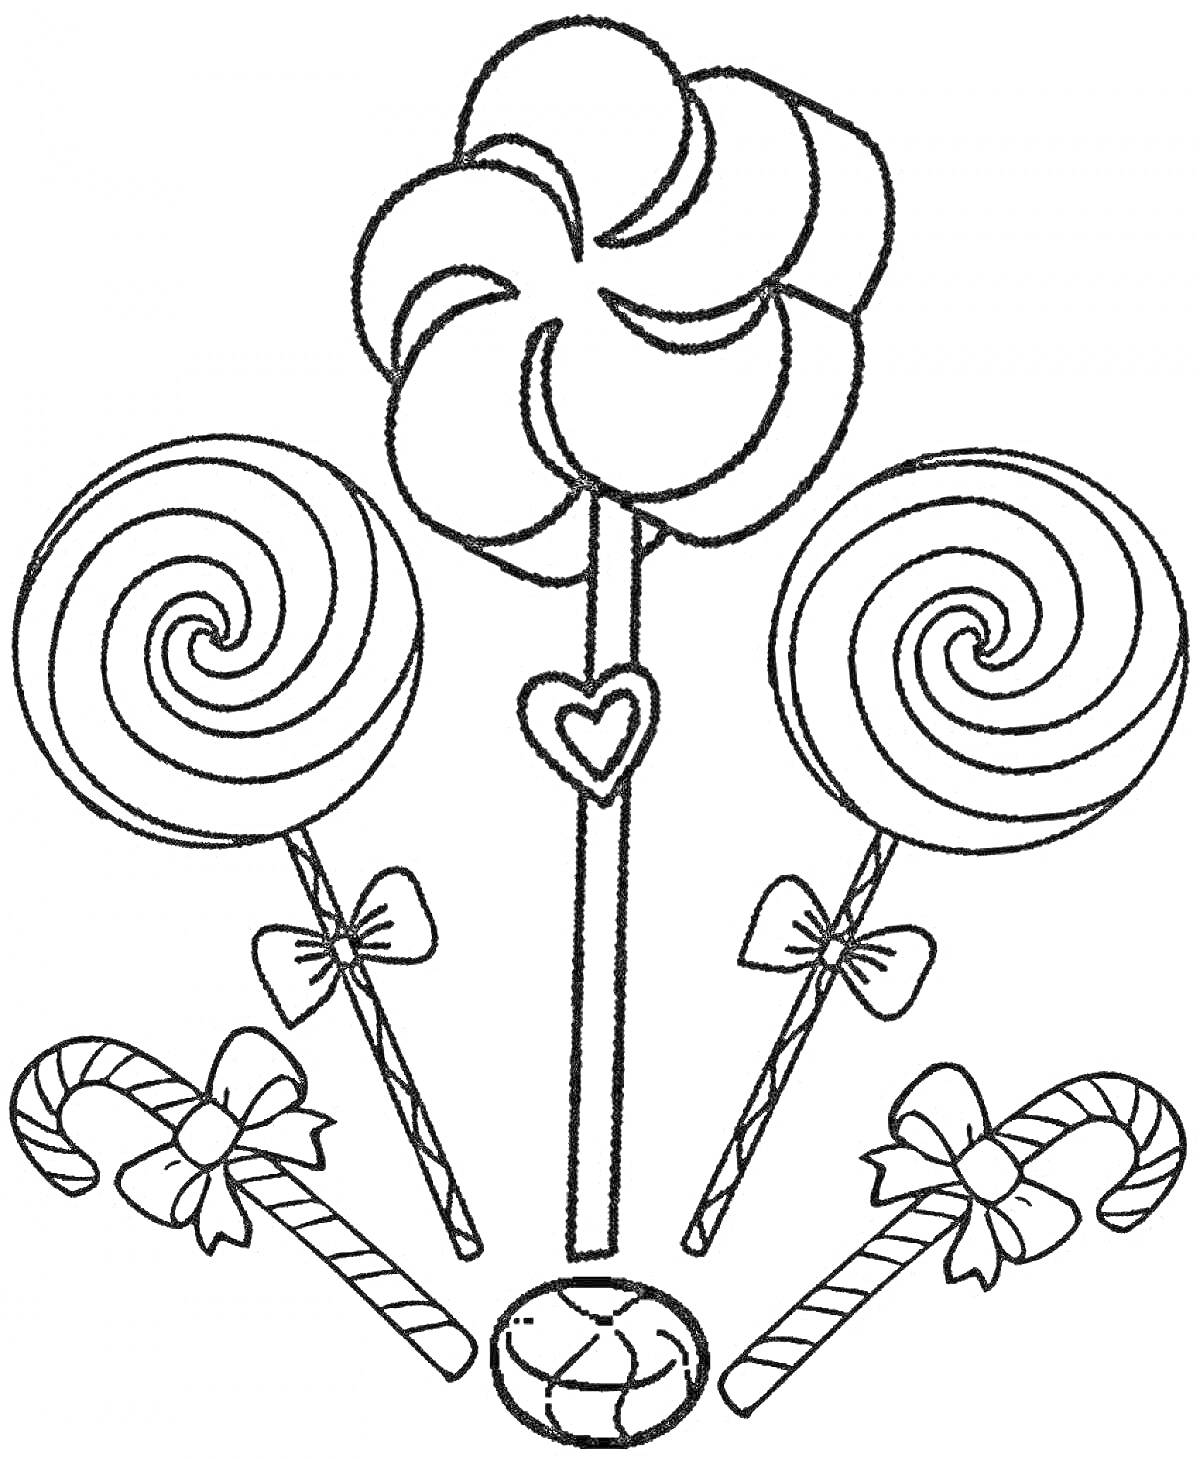 Раскраска Леденцы чупа чупс на палочках с сердцем и бантиками и карамельки с бантиками